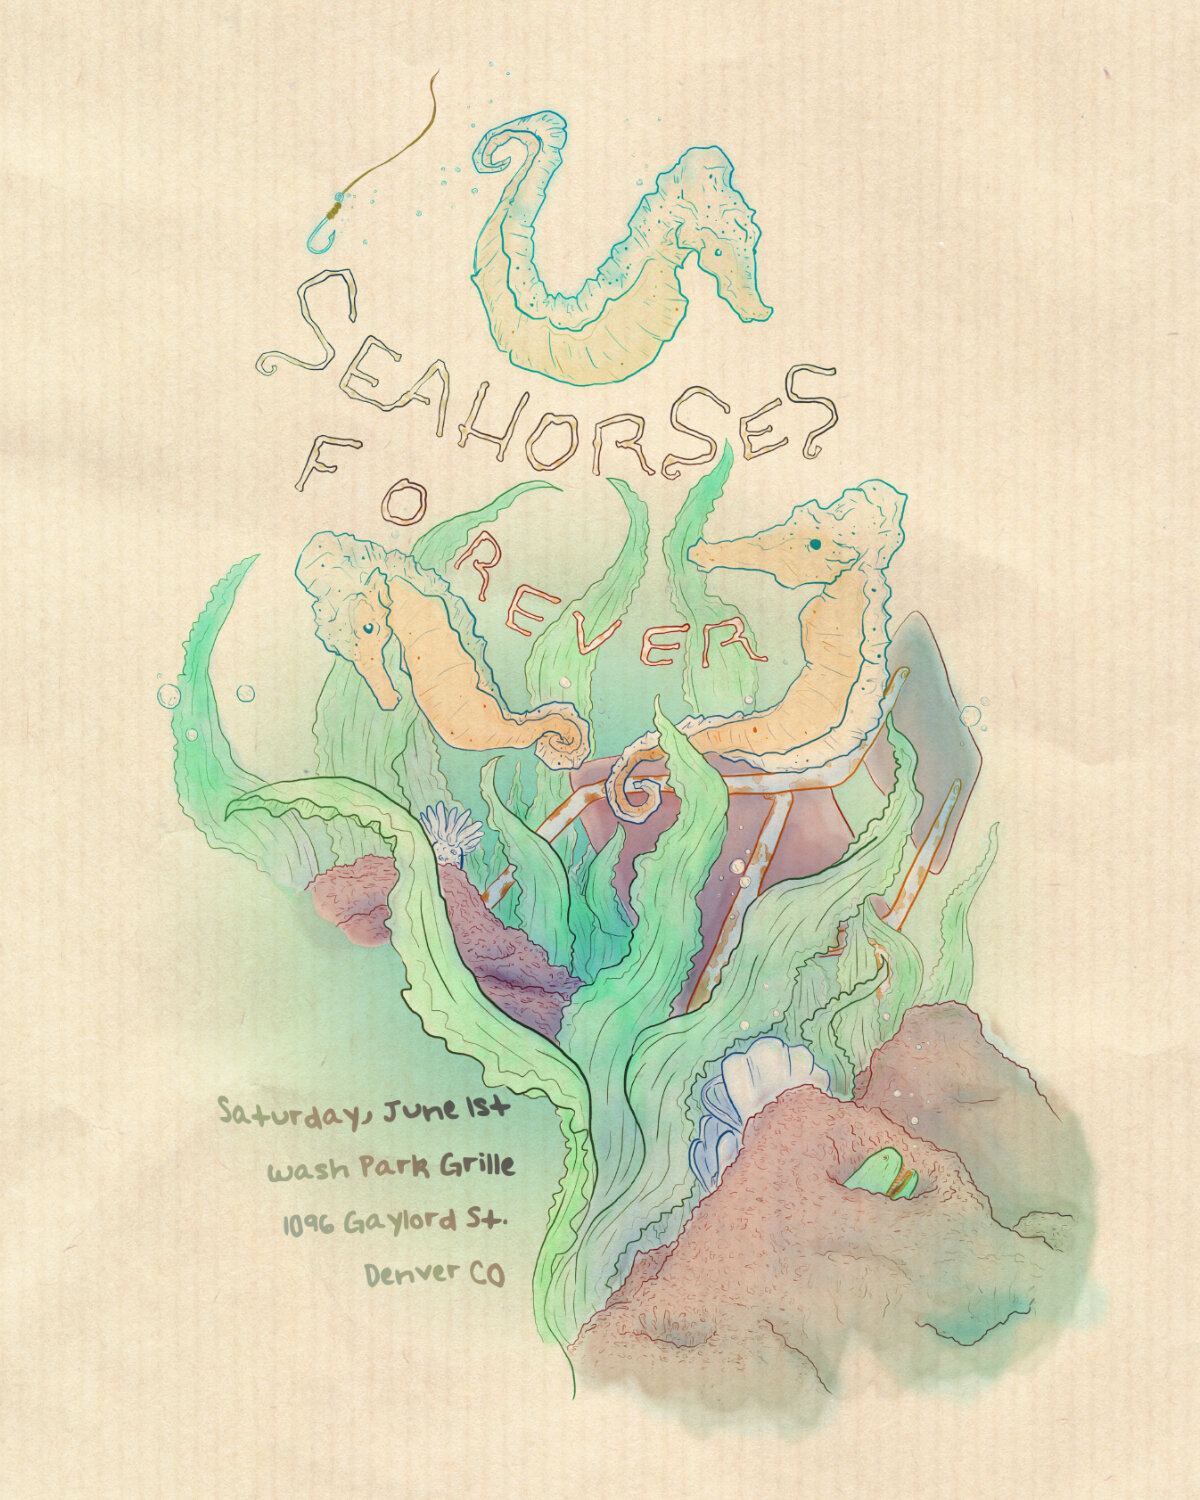 Seahorses Forever 6-1-2019 (4x5).jpg